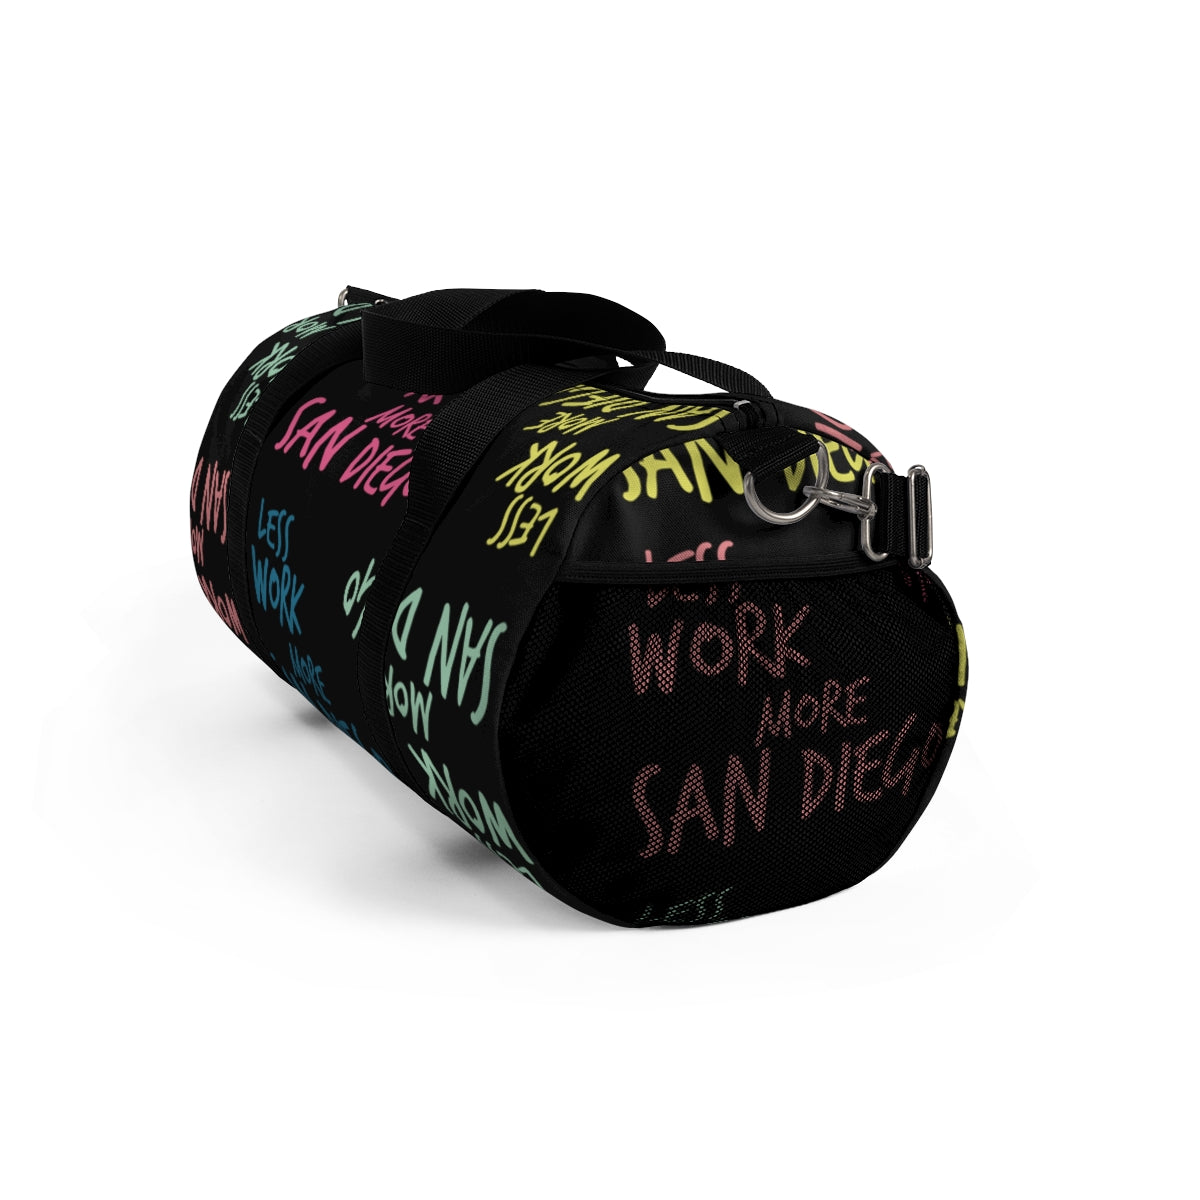 Less Work™ More San Diego Duffel Bag